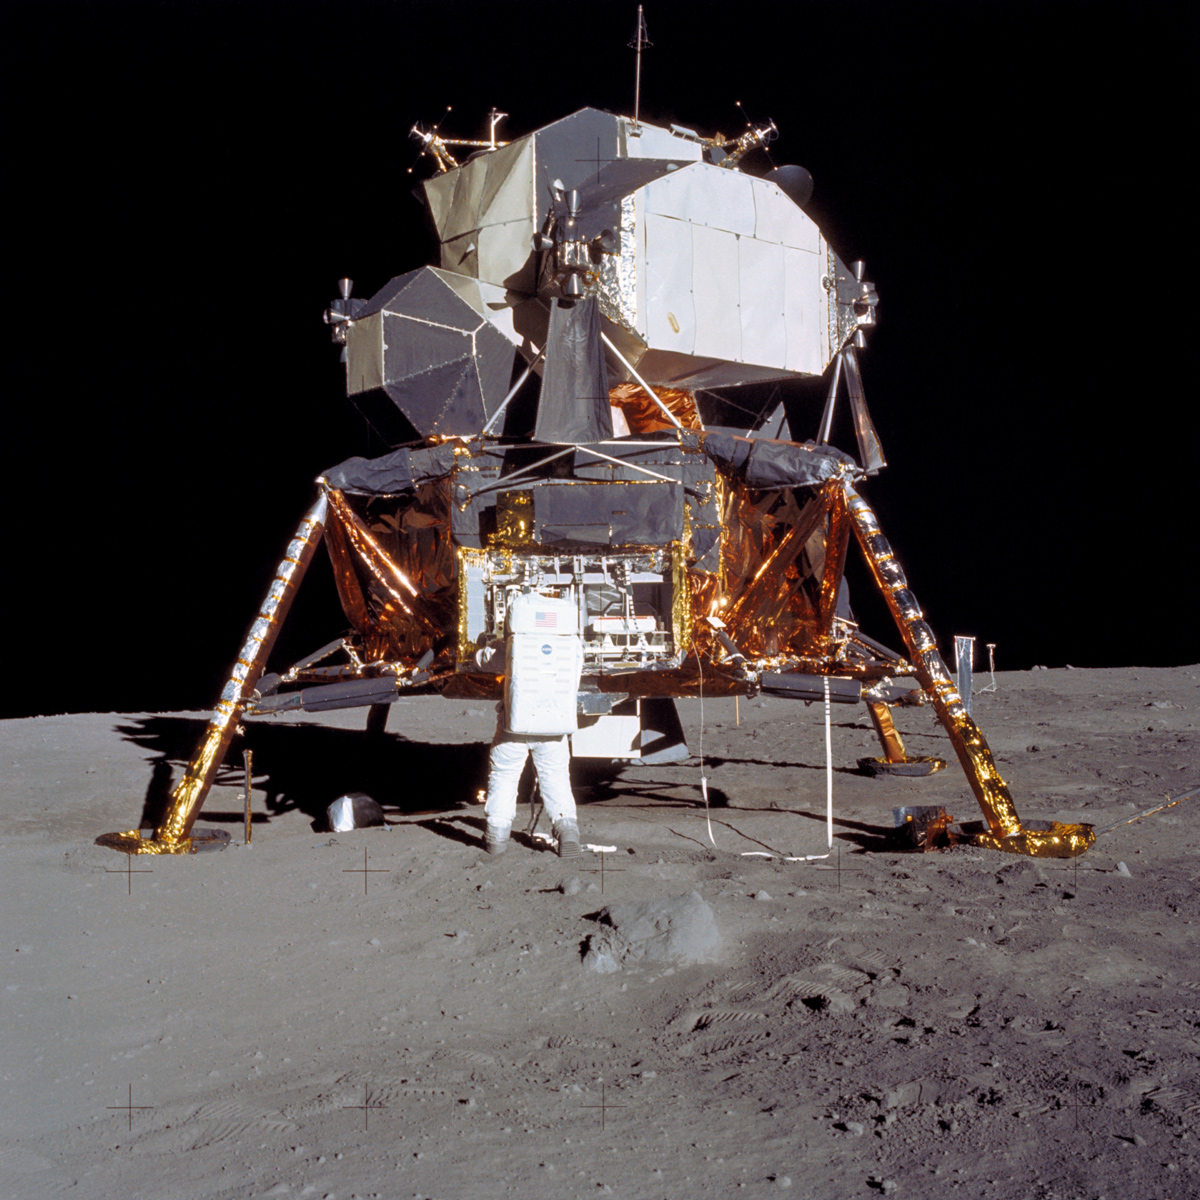 Lunar module on surface of moon